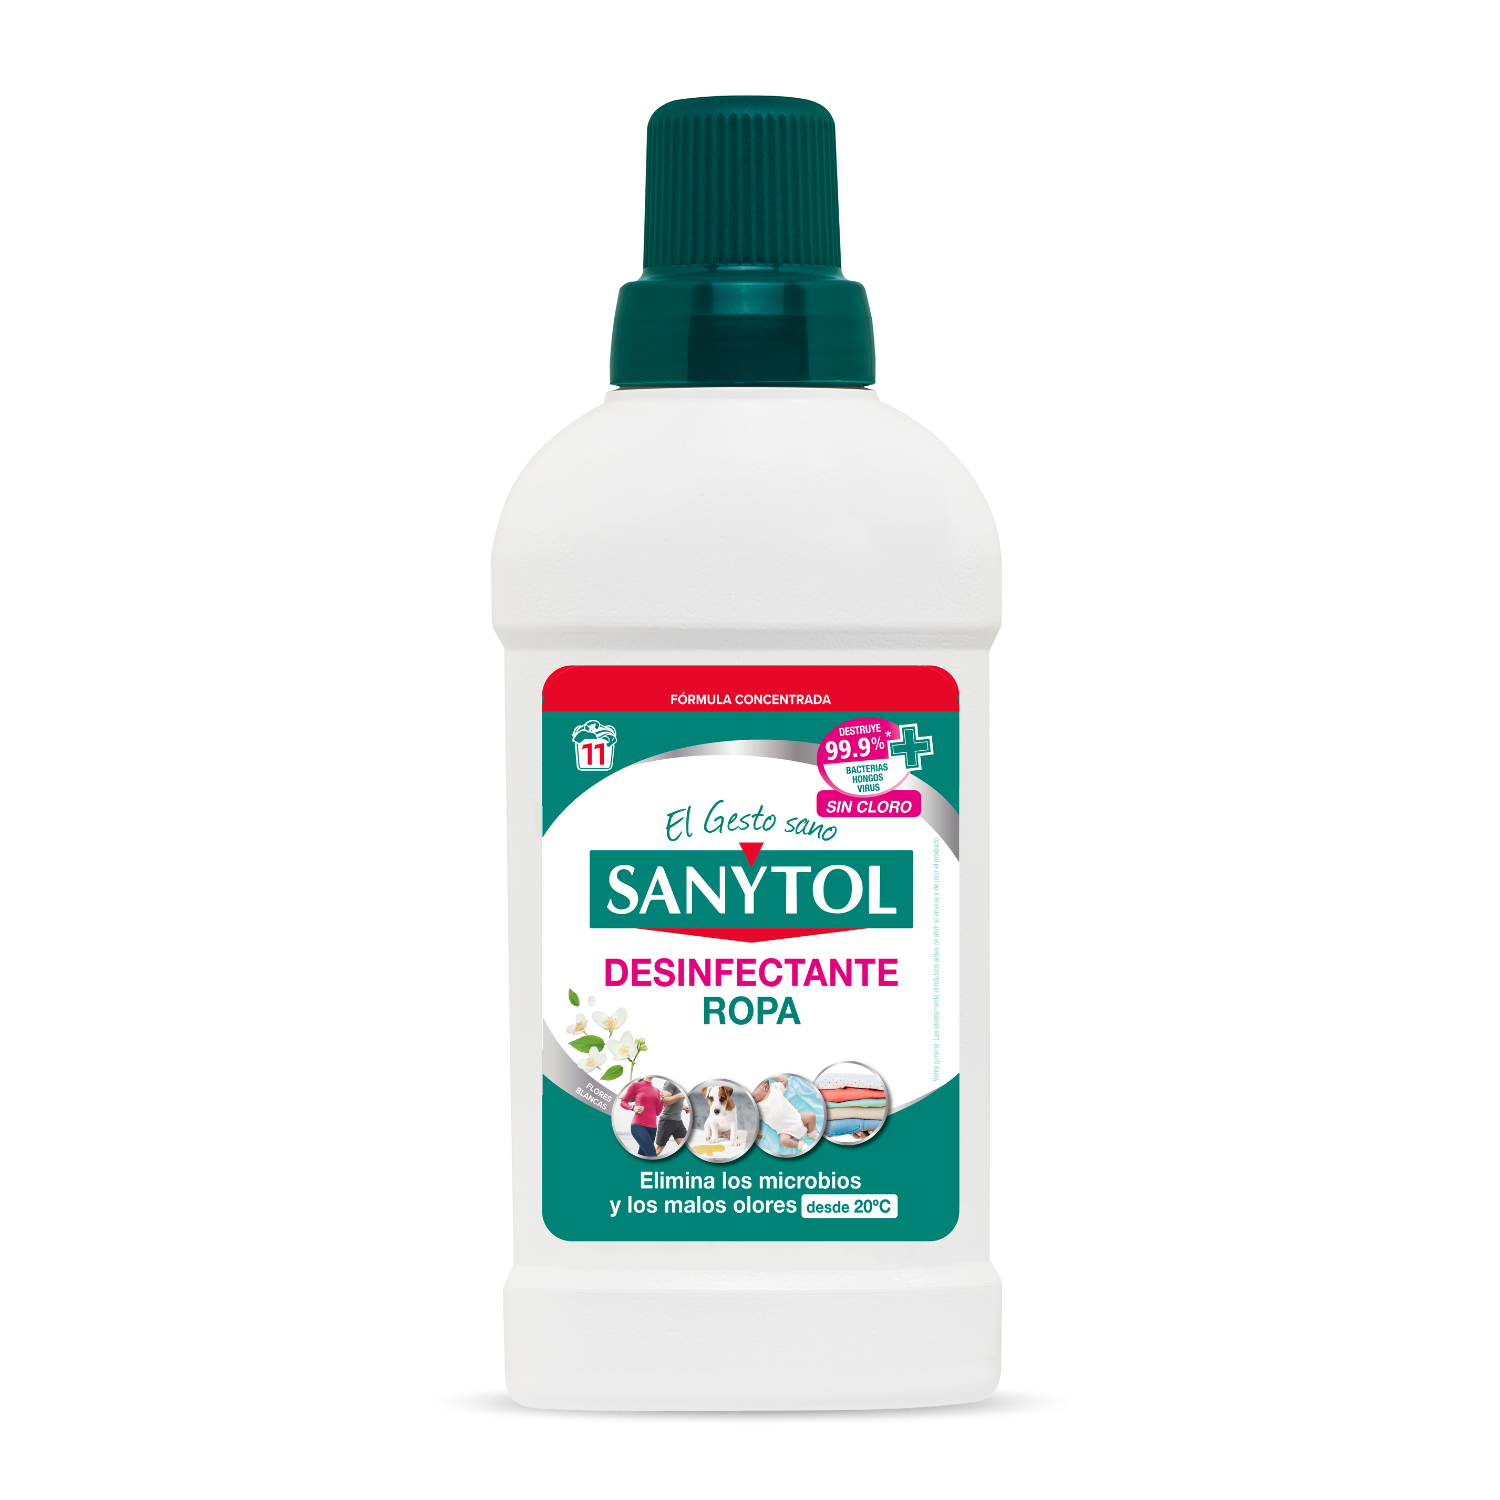 Blog de proyecto Sanytol Desinfectante Textil - Sanytol